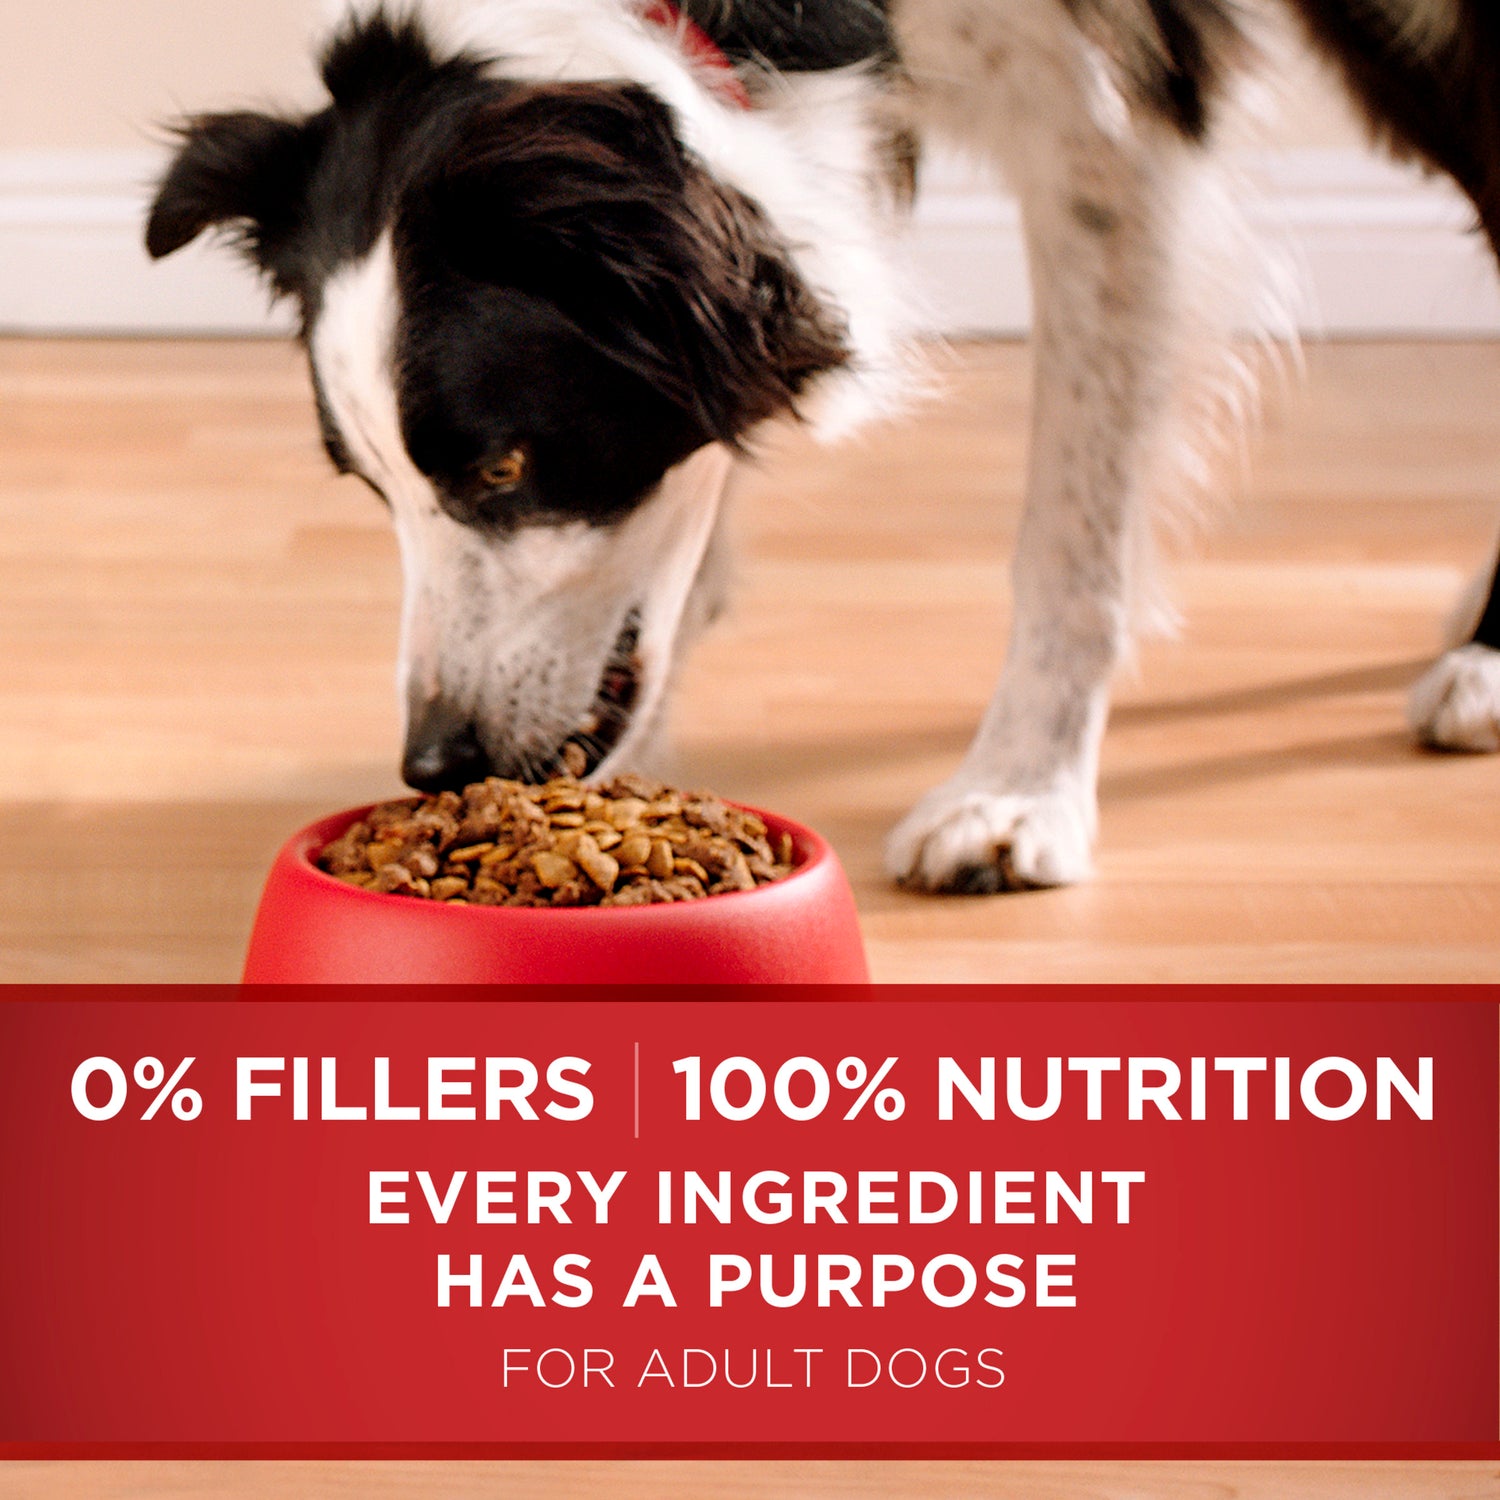 Purina ONE Natural Dry Dog Food, Smartblend Lamb & Rice Formula, 8 Lb. Bag